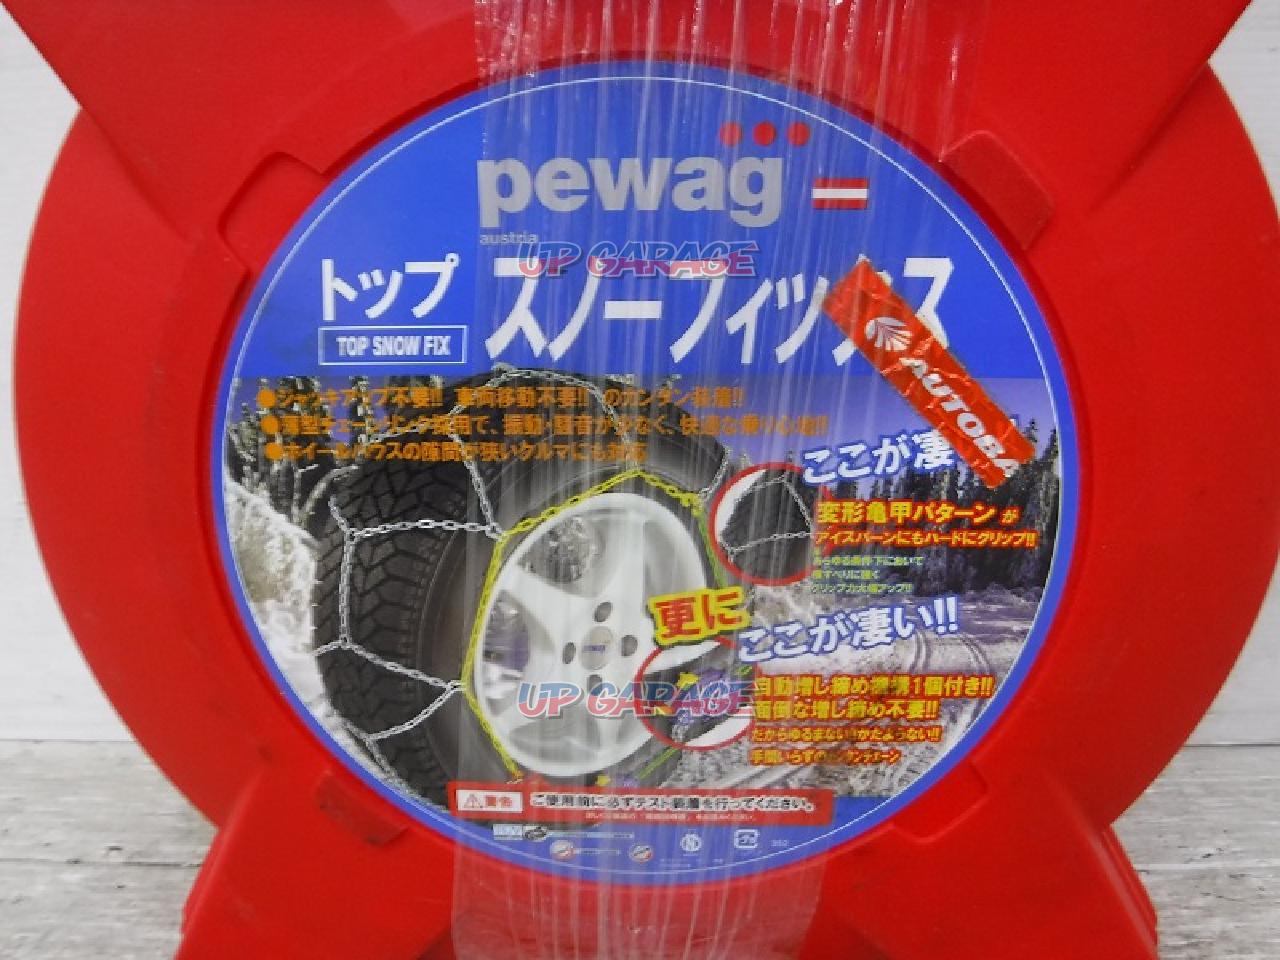 Pewag トップスノーフィックス TSF64 | タイヤホイール関連 チェーン ...